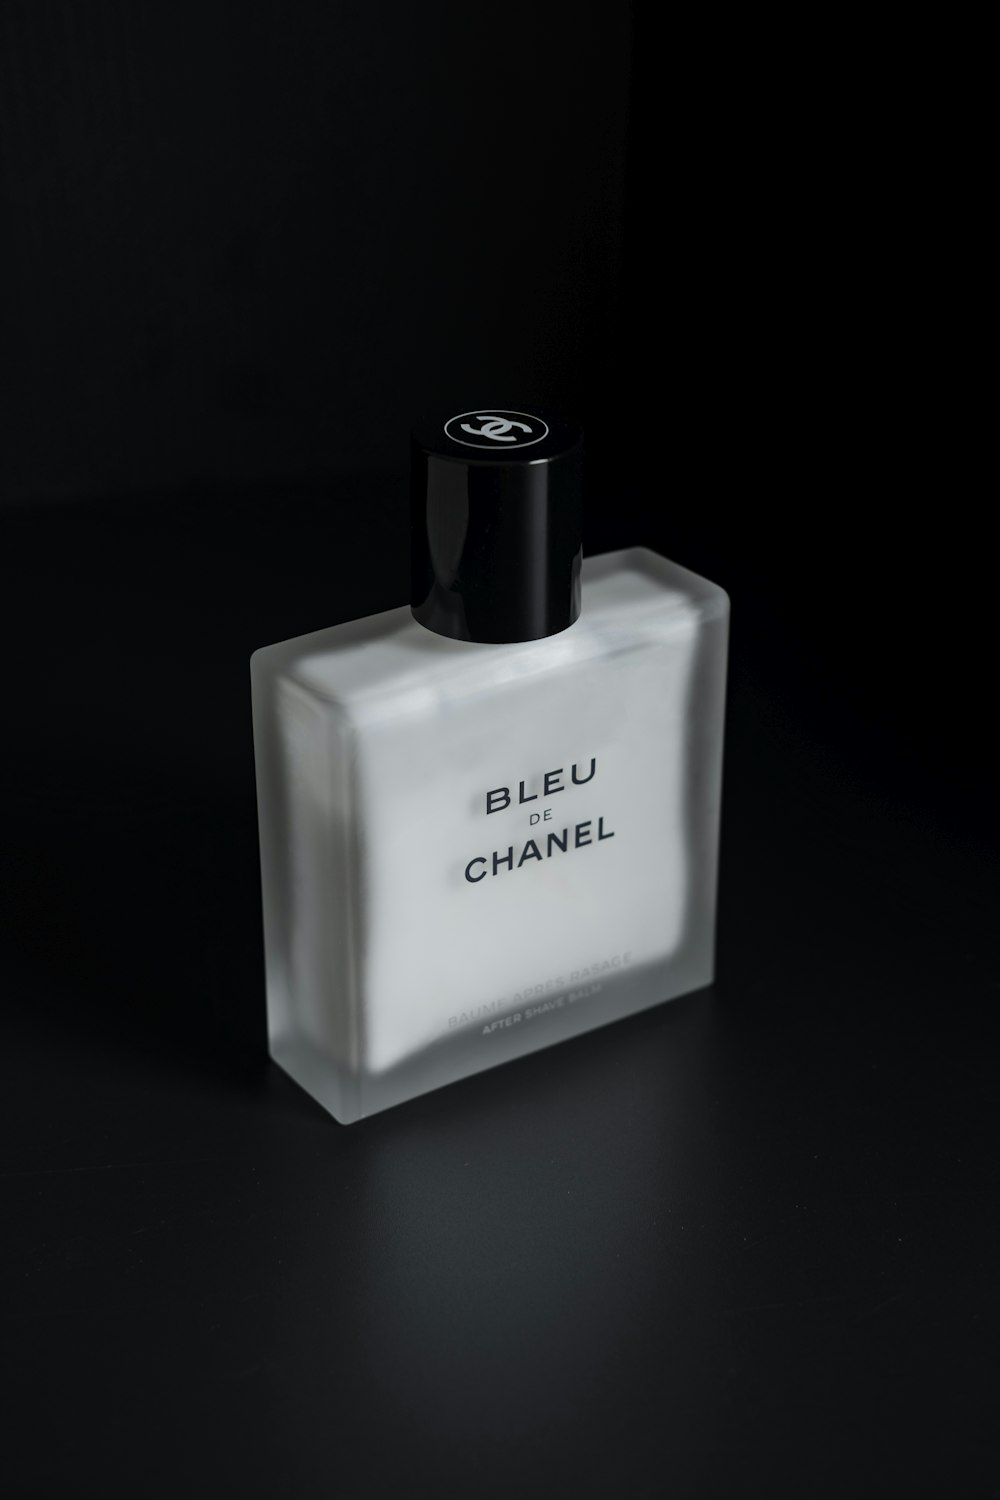 Calvin klein one perfume bottle photo – Free Grey Image on Unsplash